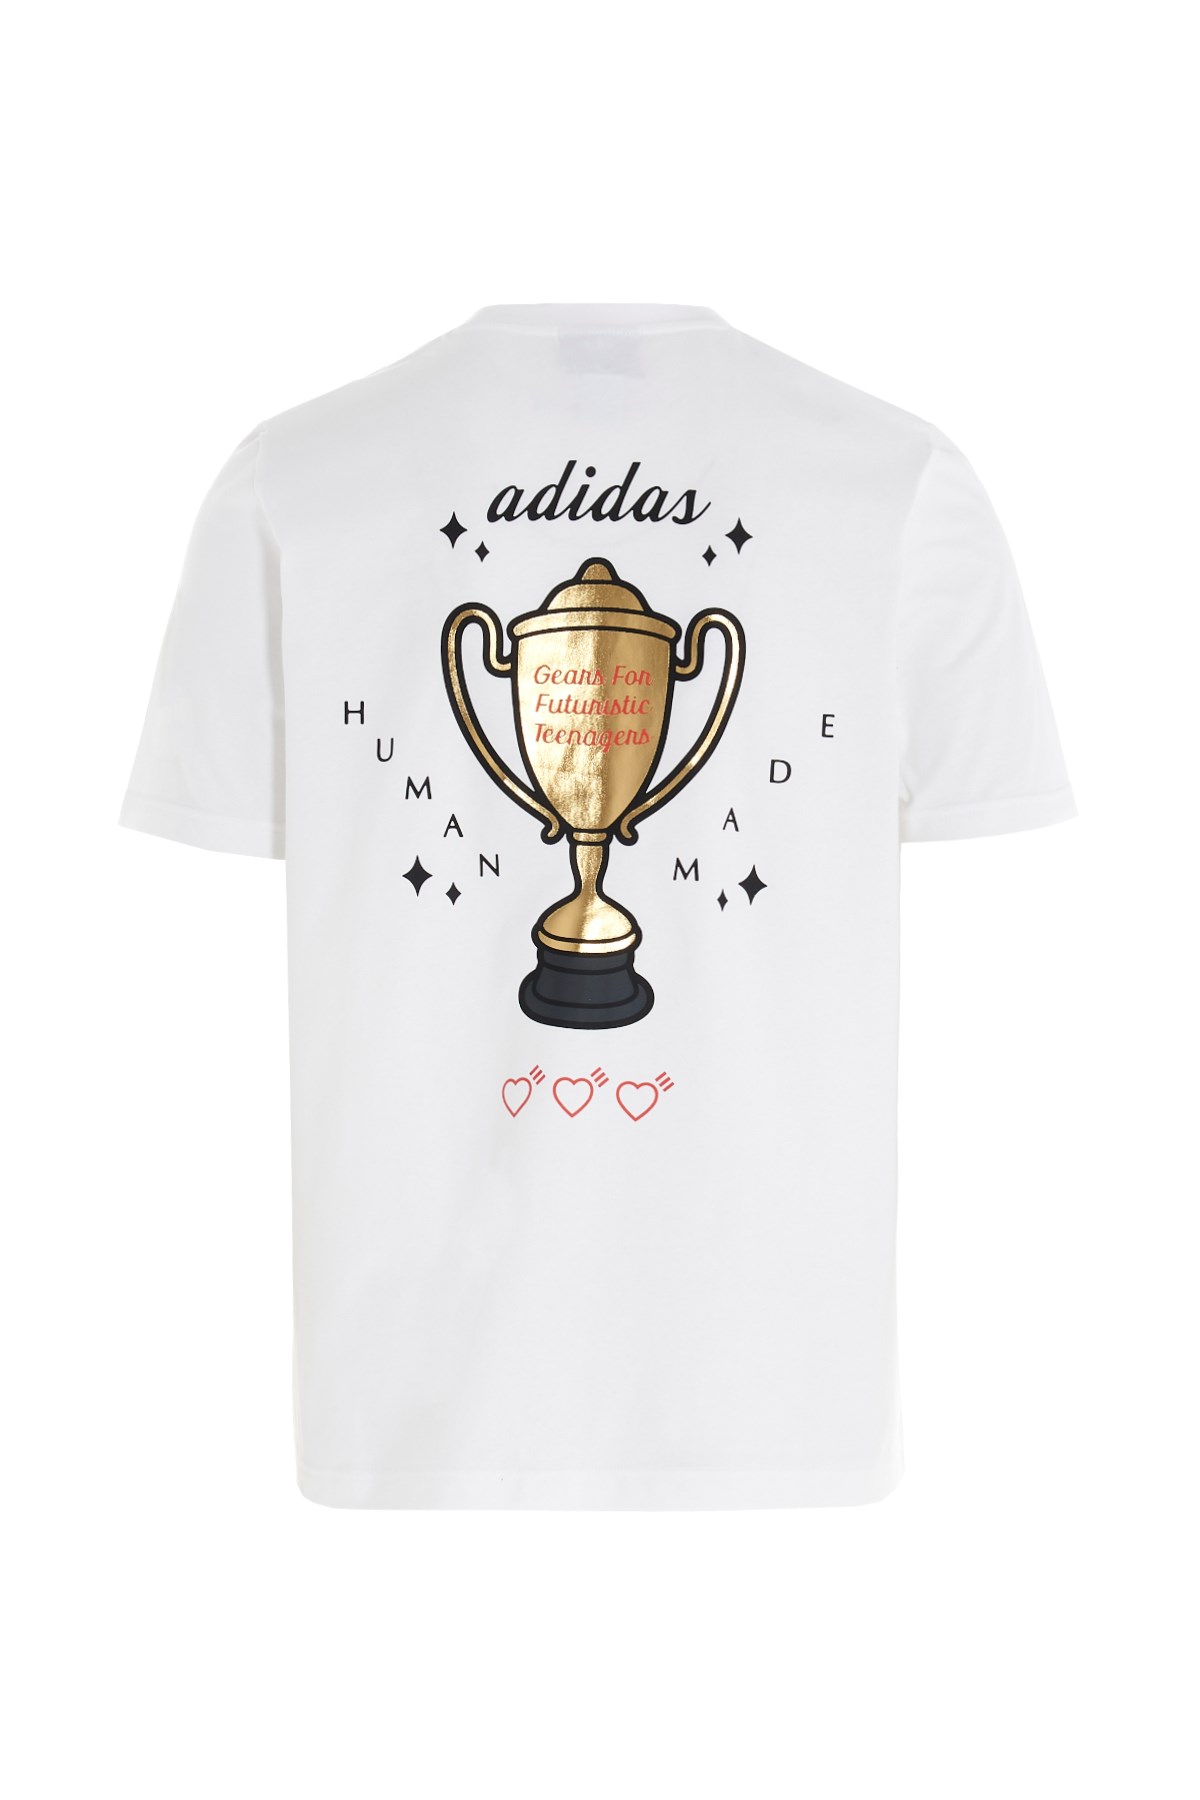 ADIDAS STATEMENT Human Made'graphic Tee' Capsule T-Shirt